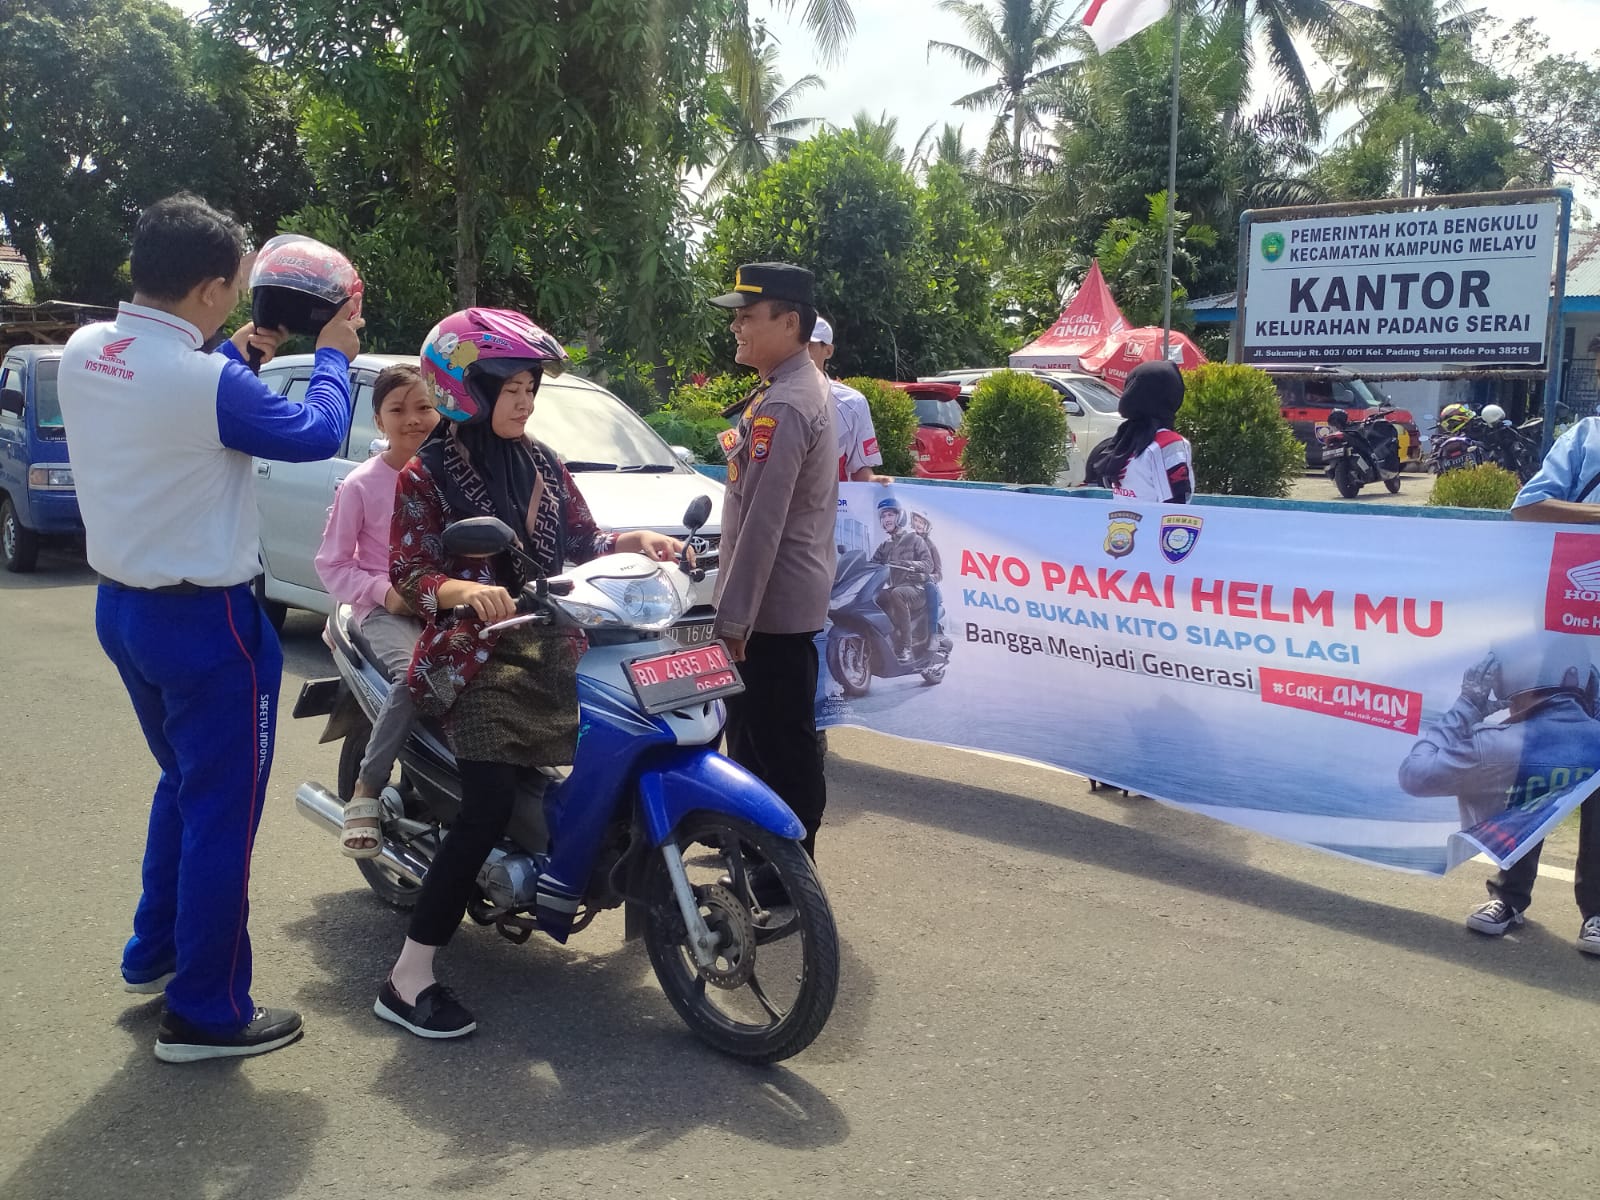 Berbahaya Bonceng Anak di Depan, Ini Tips #Cari_Aman Berkendara Bersama Anak dari Honda Bengkulu